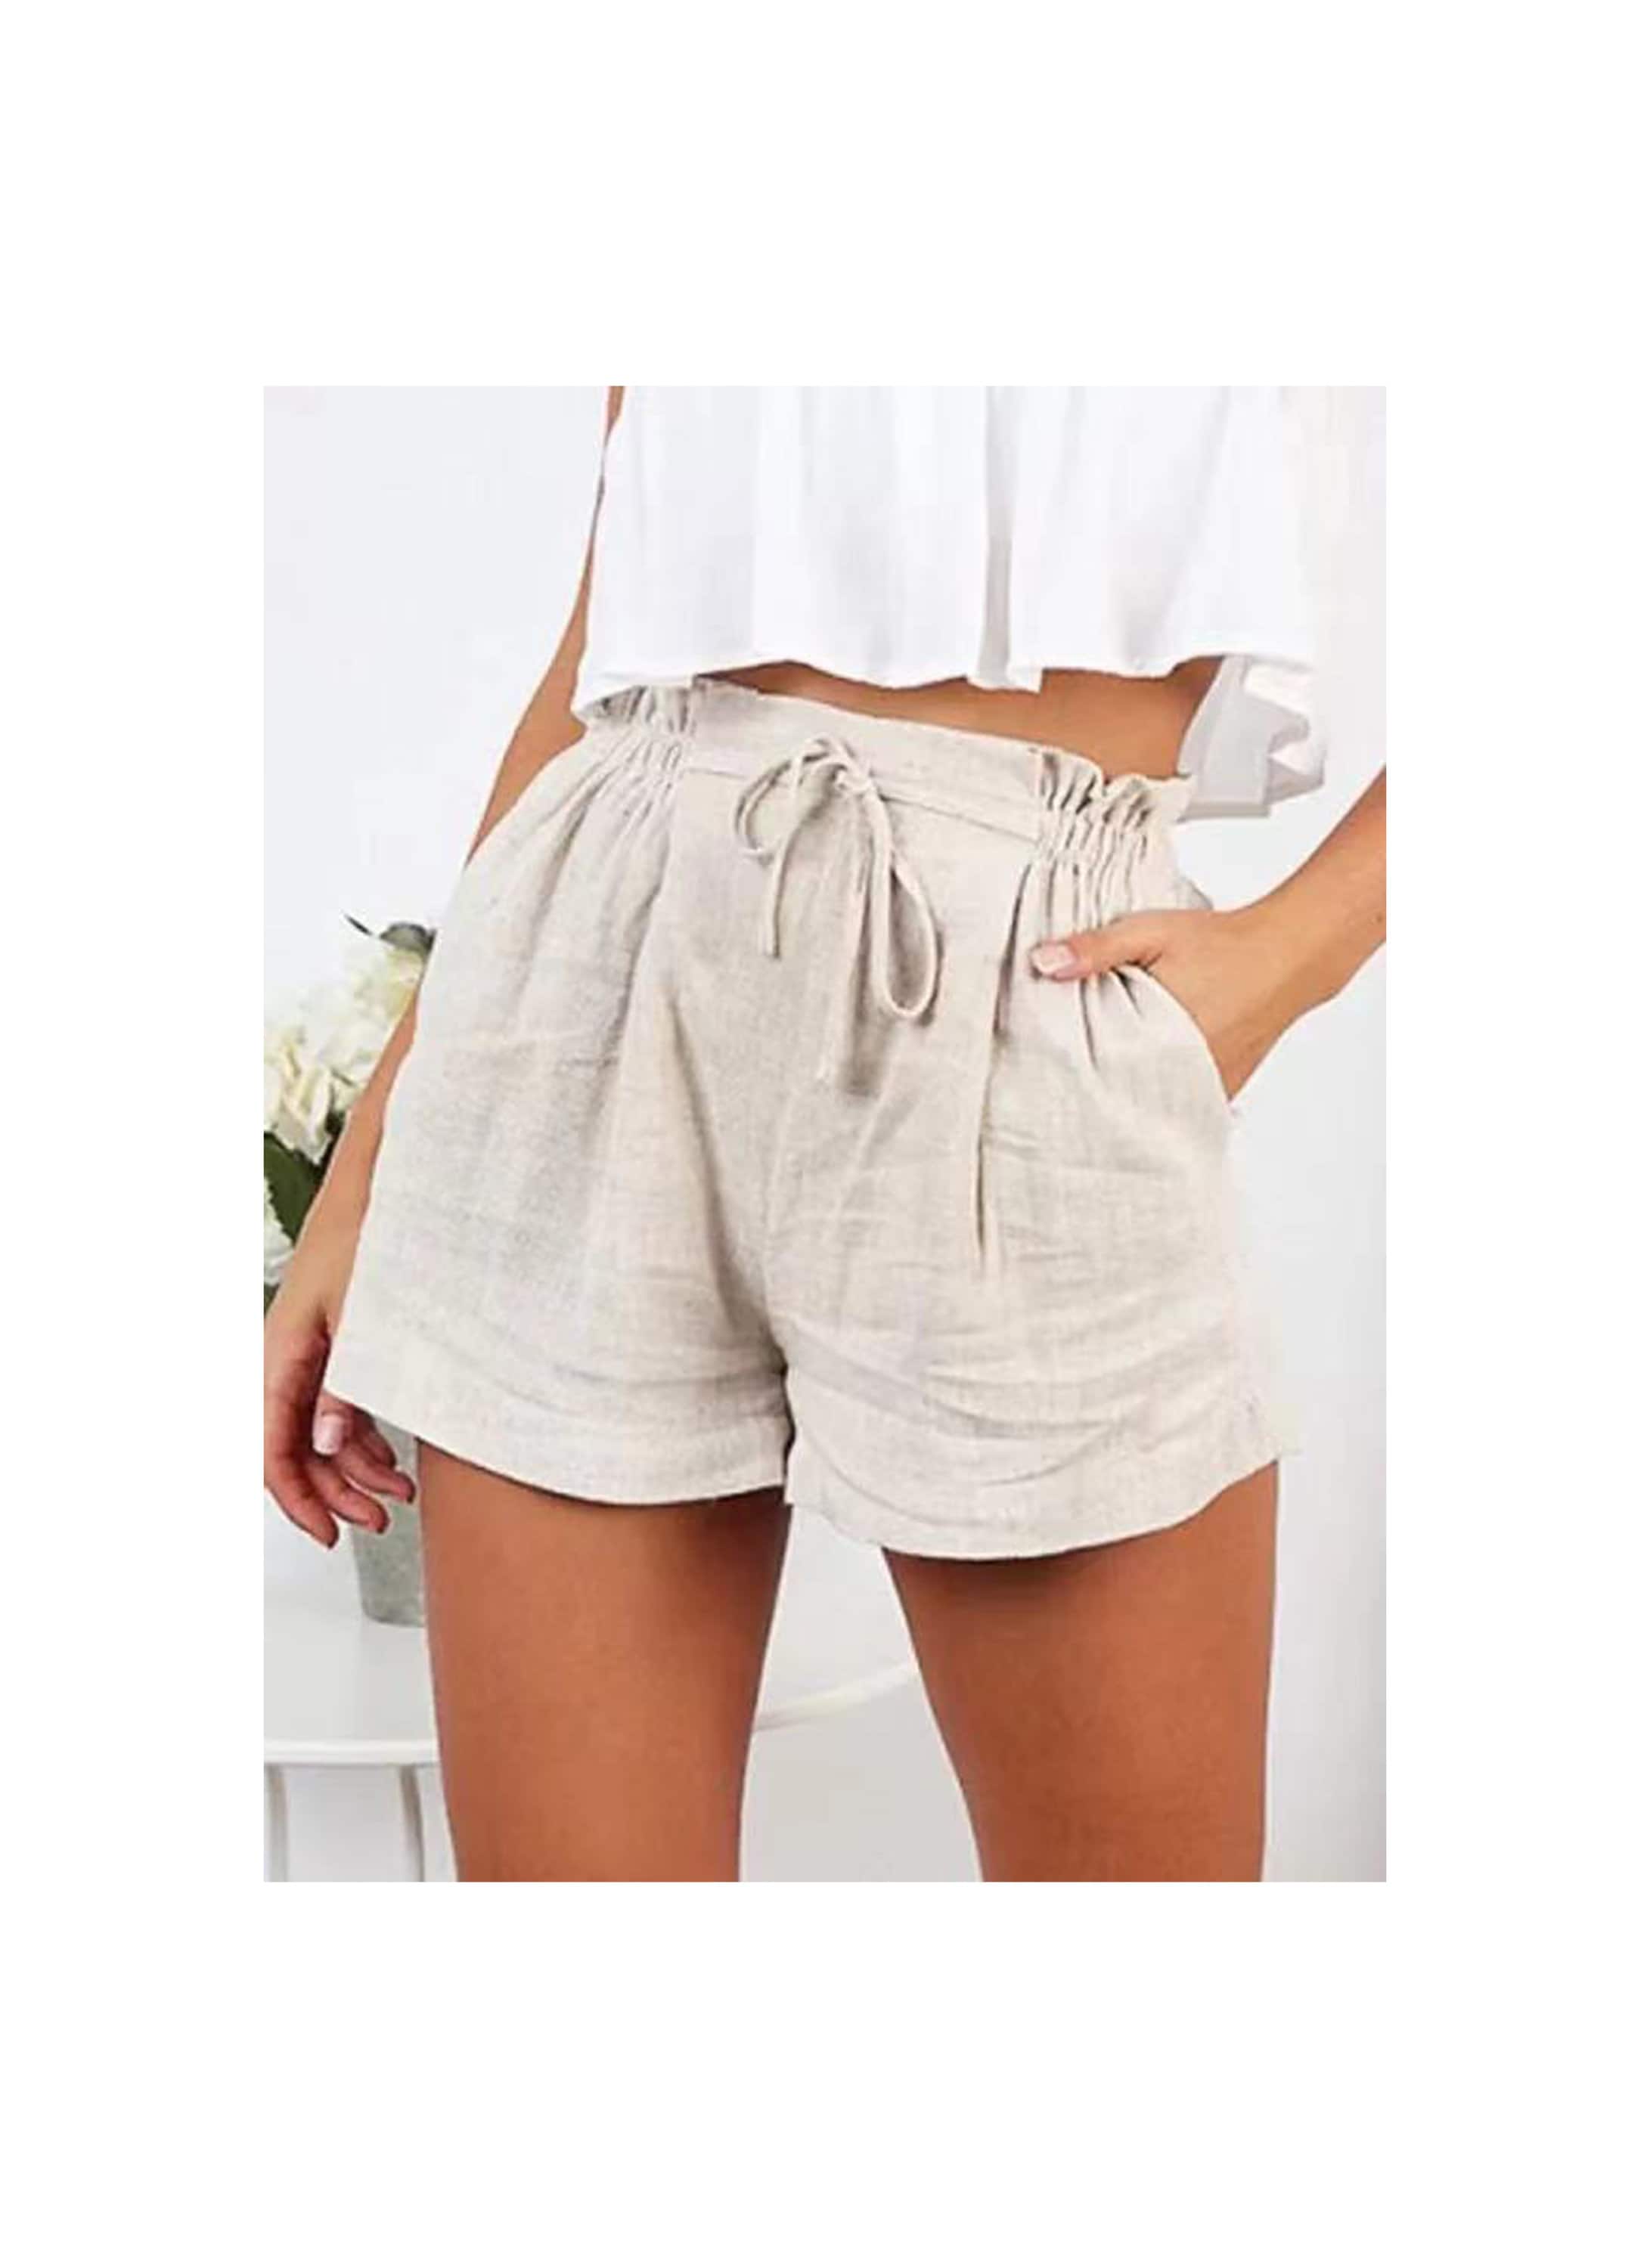 Linen Elastic Waist Shorts Premium Linen Clothing for Women 